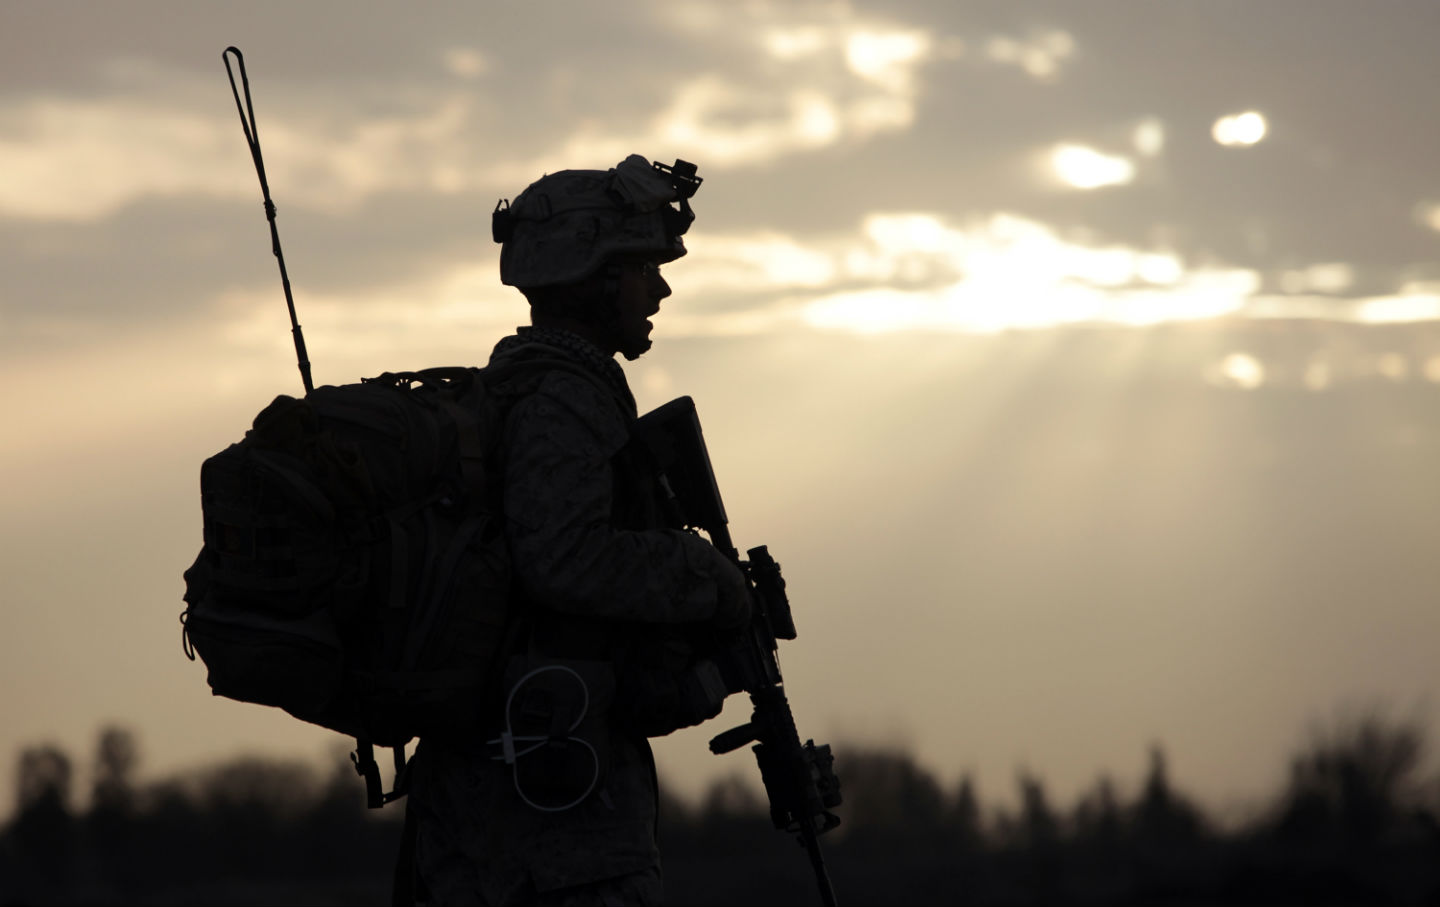 US soldier in Afghanistan